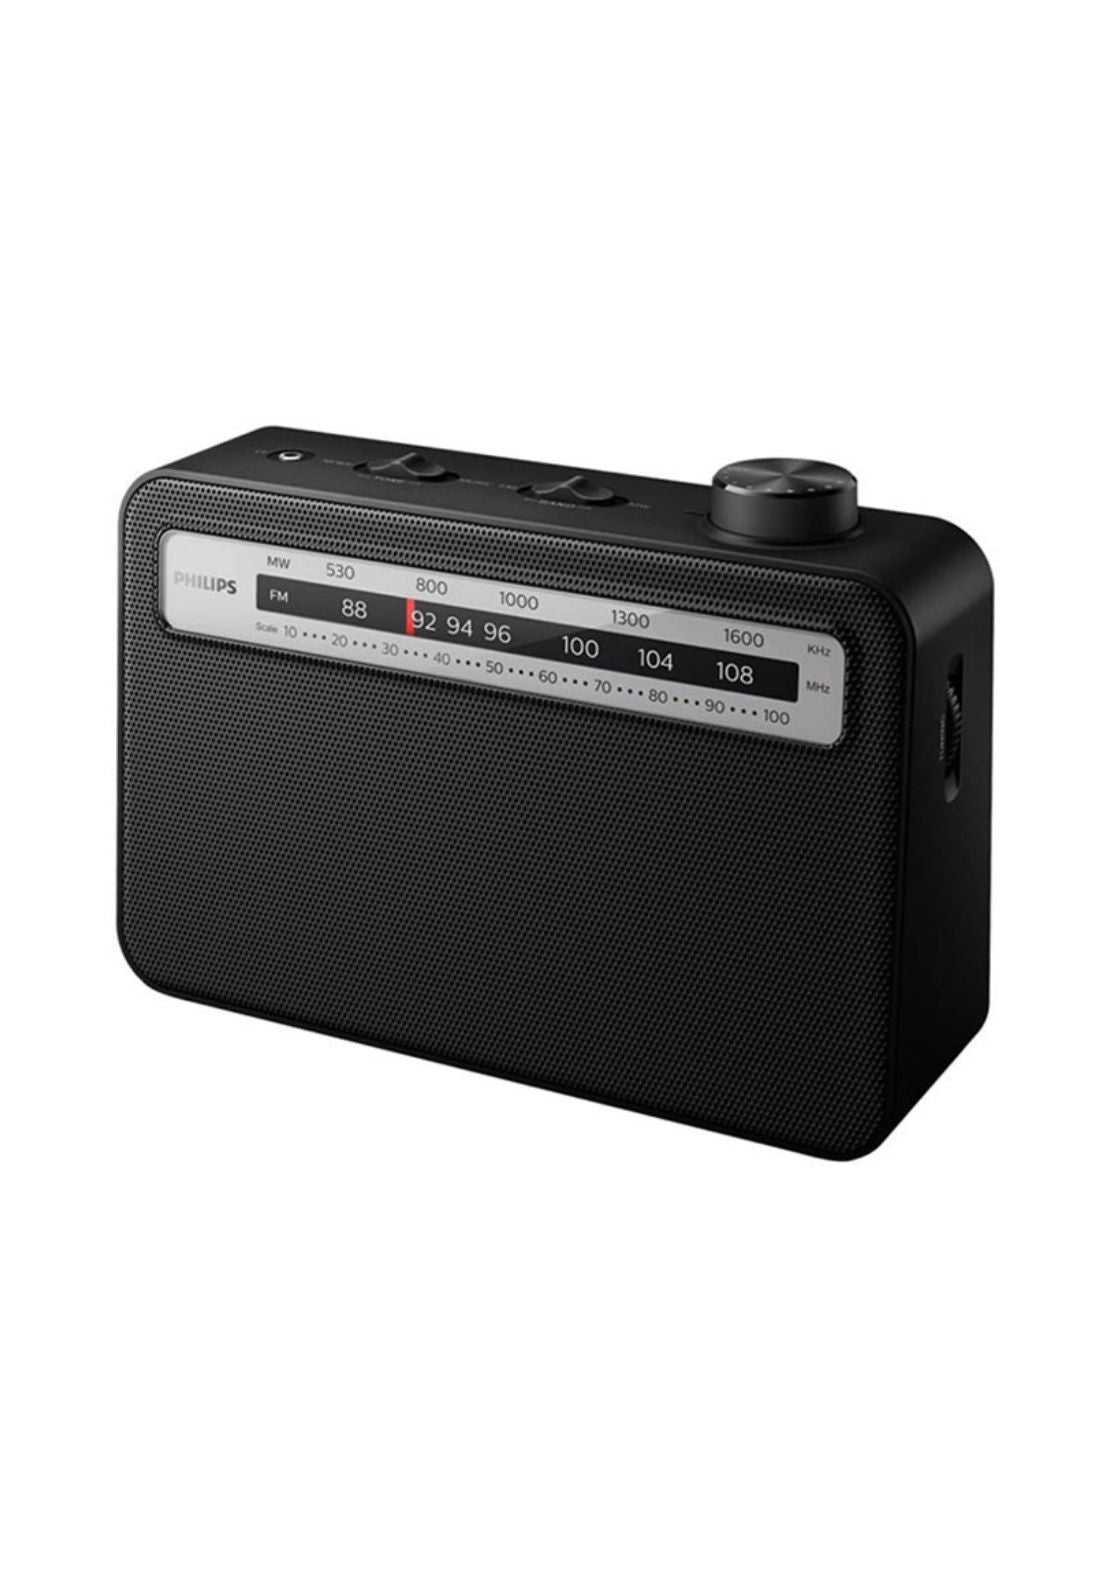 Philips Portable Radio Fm/Mw | Tar250612 1 Shaws Department Stores